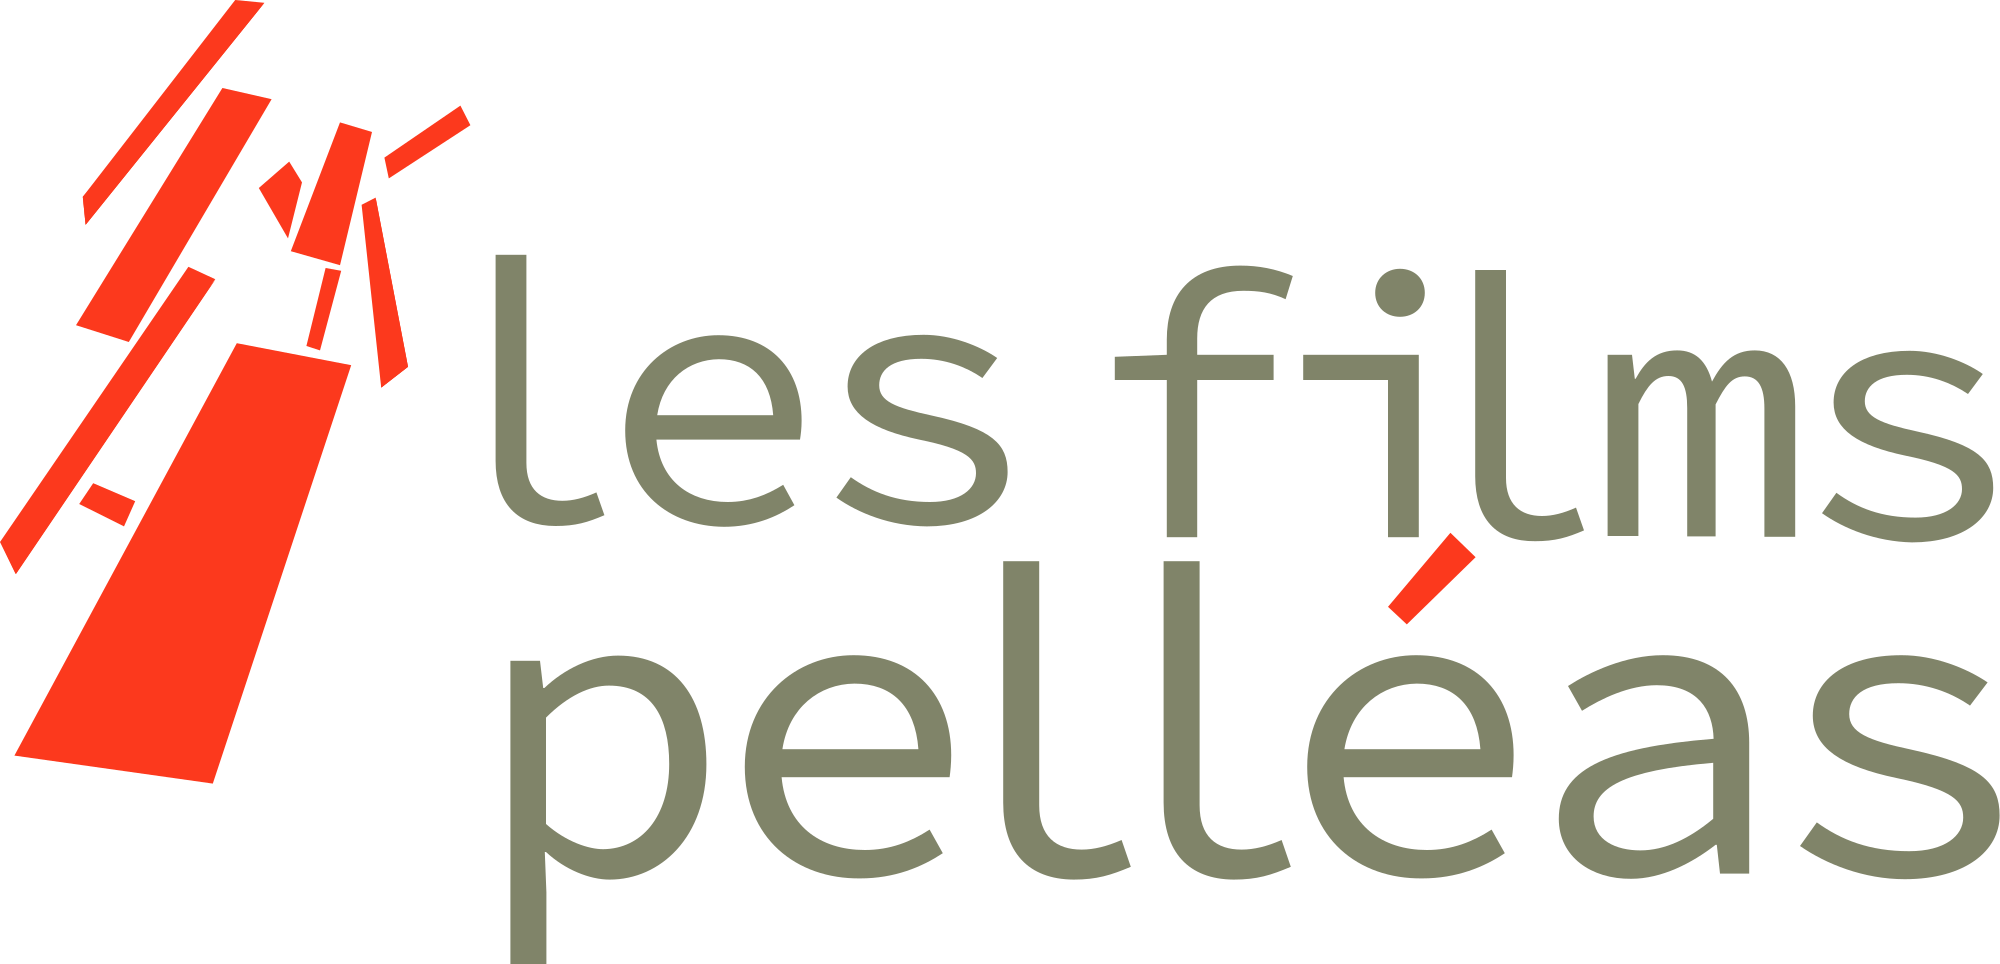 Les Films Pelléas Logo